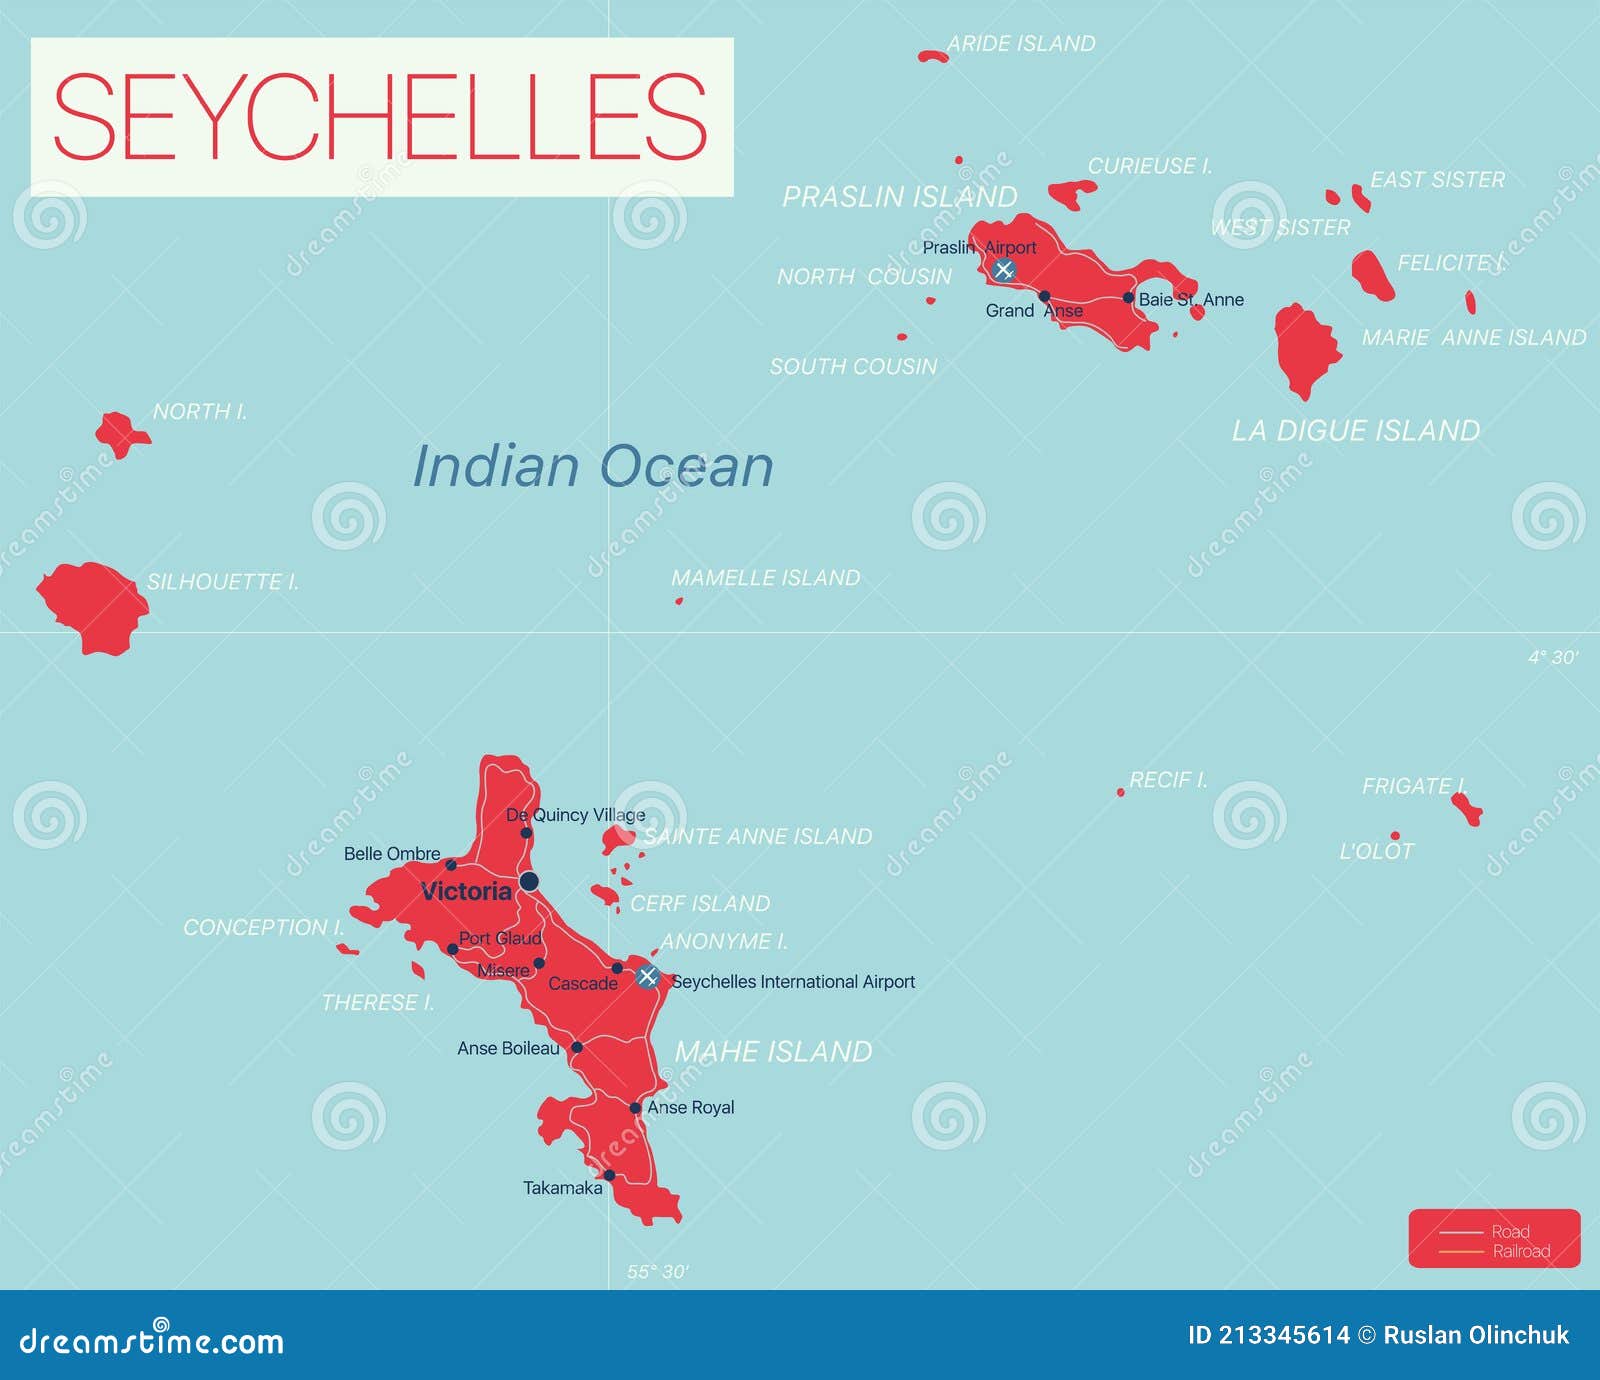 seychelles islands detailed editable map